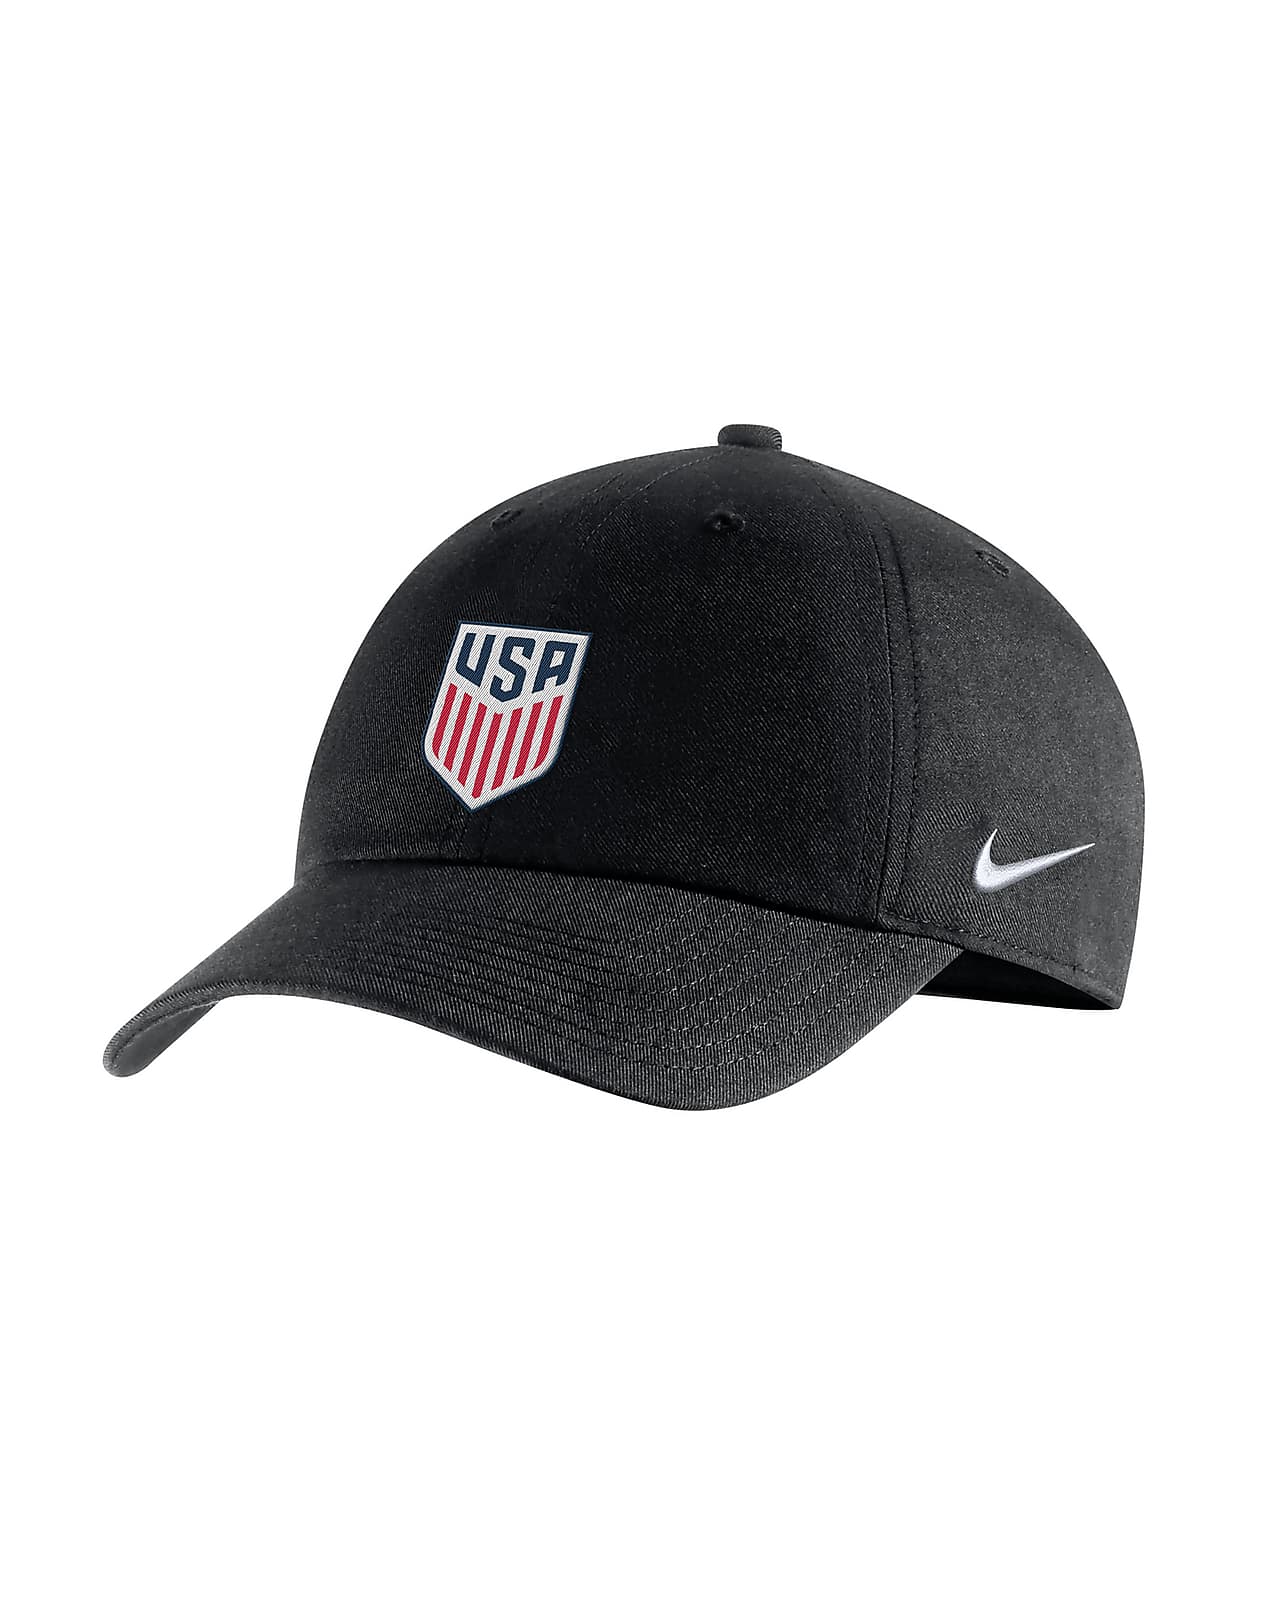 Asombrosamente malla Quien USMNT Heritage86 Men's Adjustable Hat. Nike.com